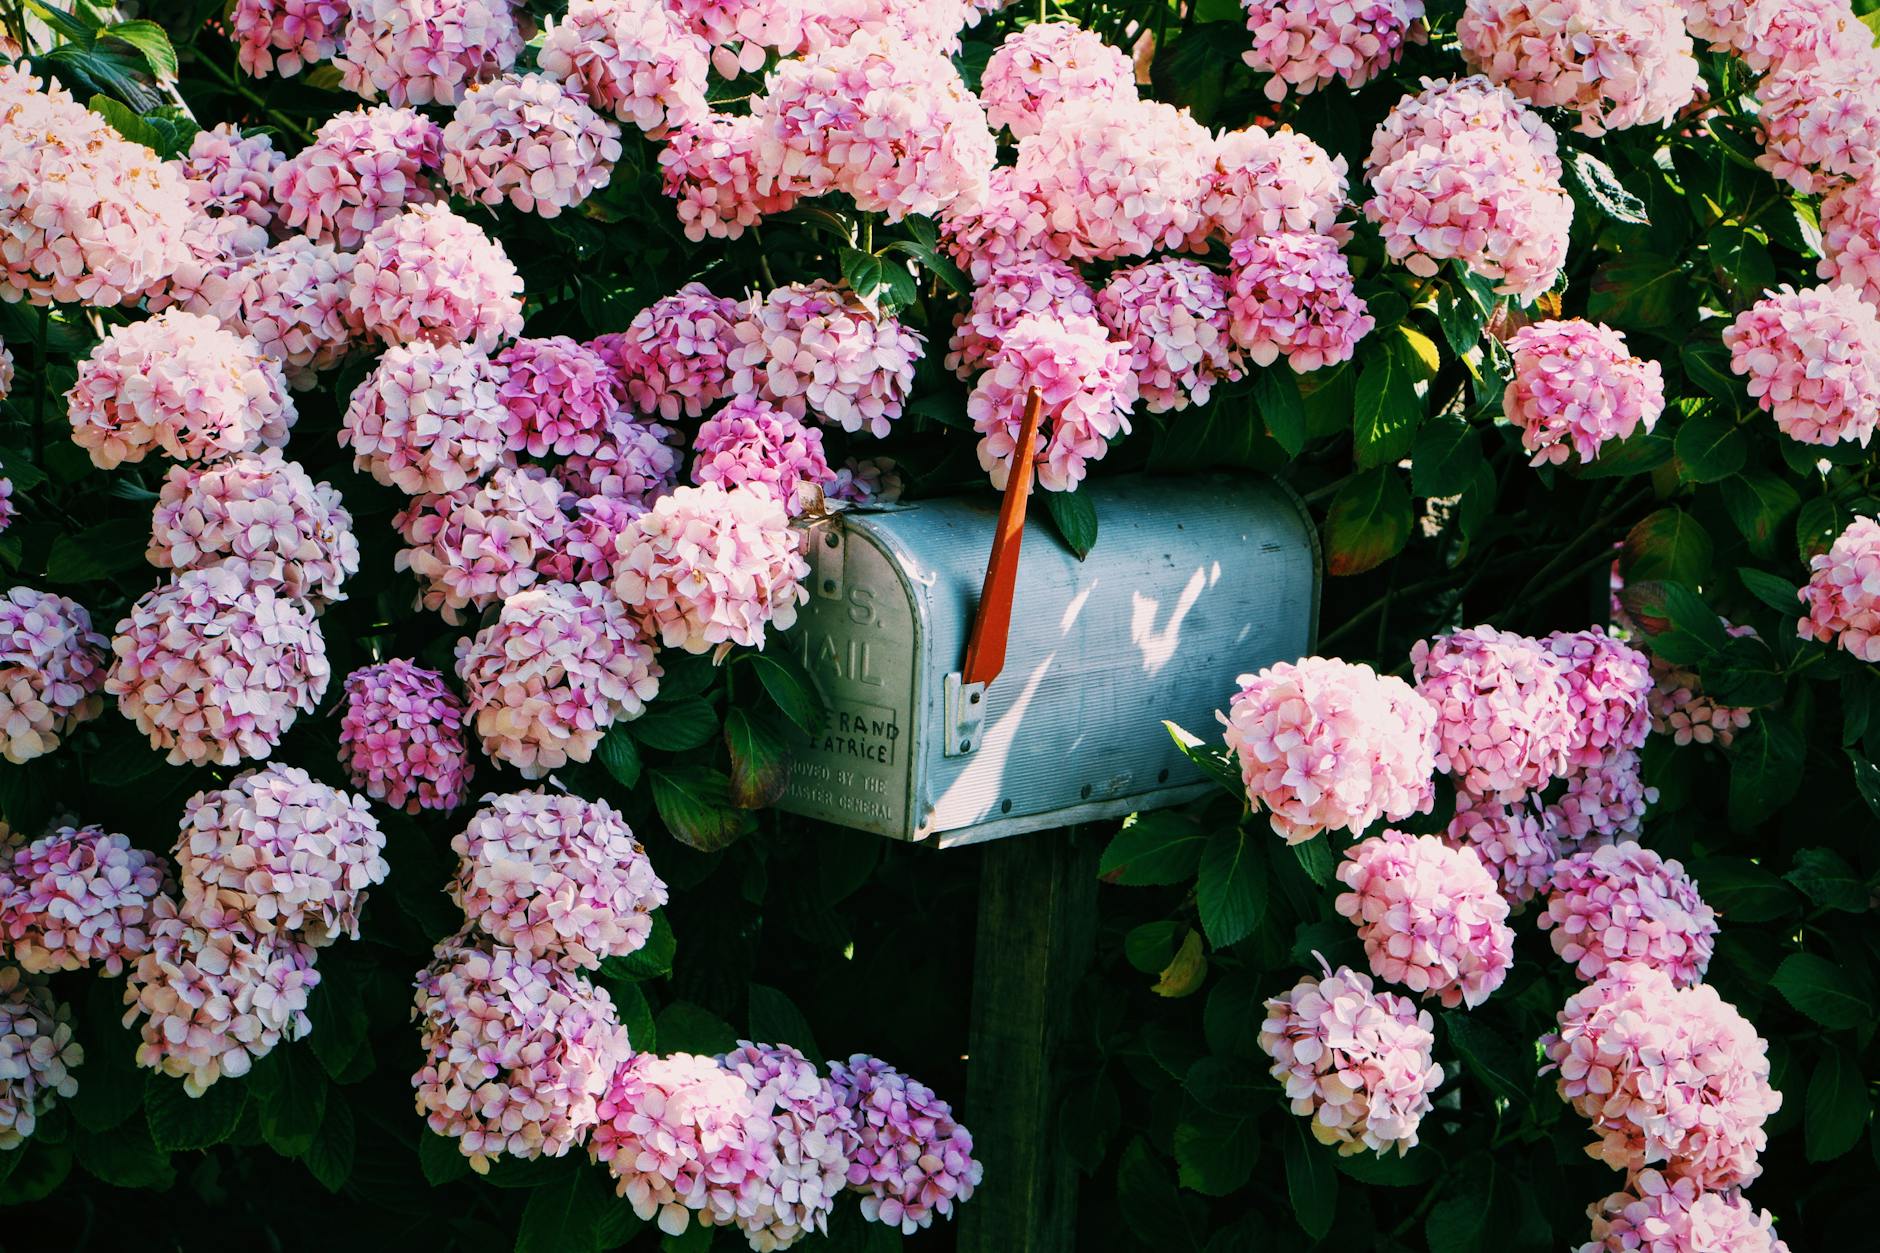 mailbox in blooming shrubs